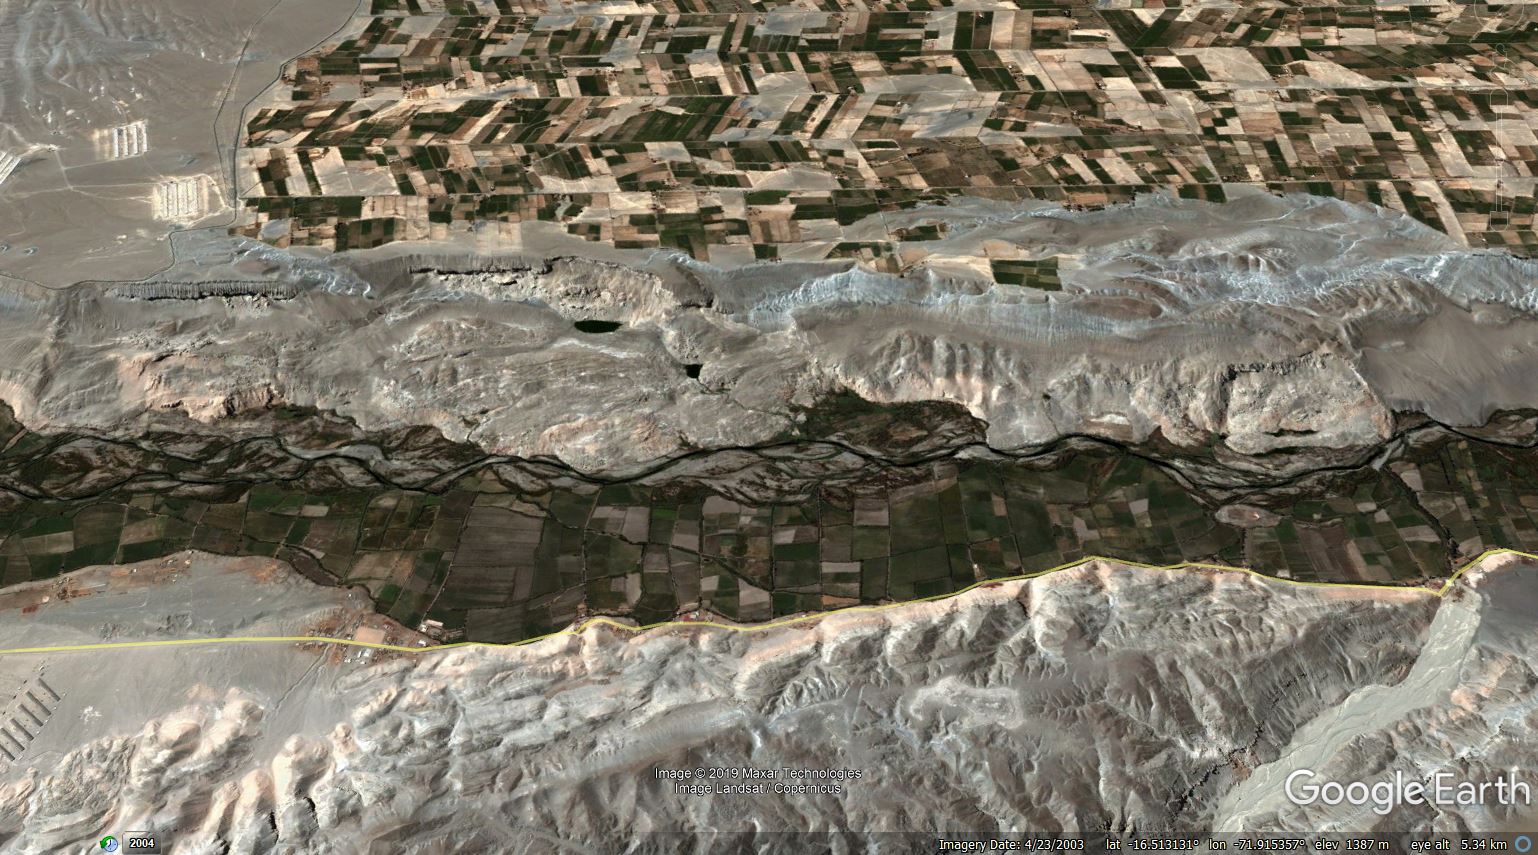 Landslides driven by irrigation in Peru